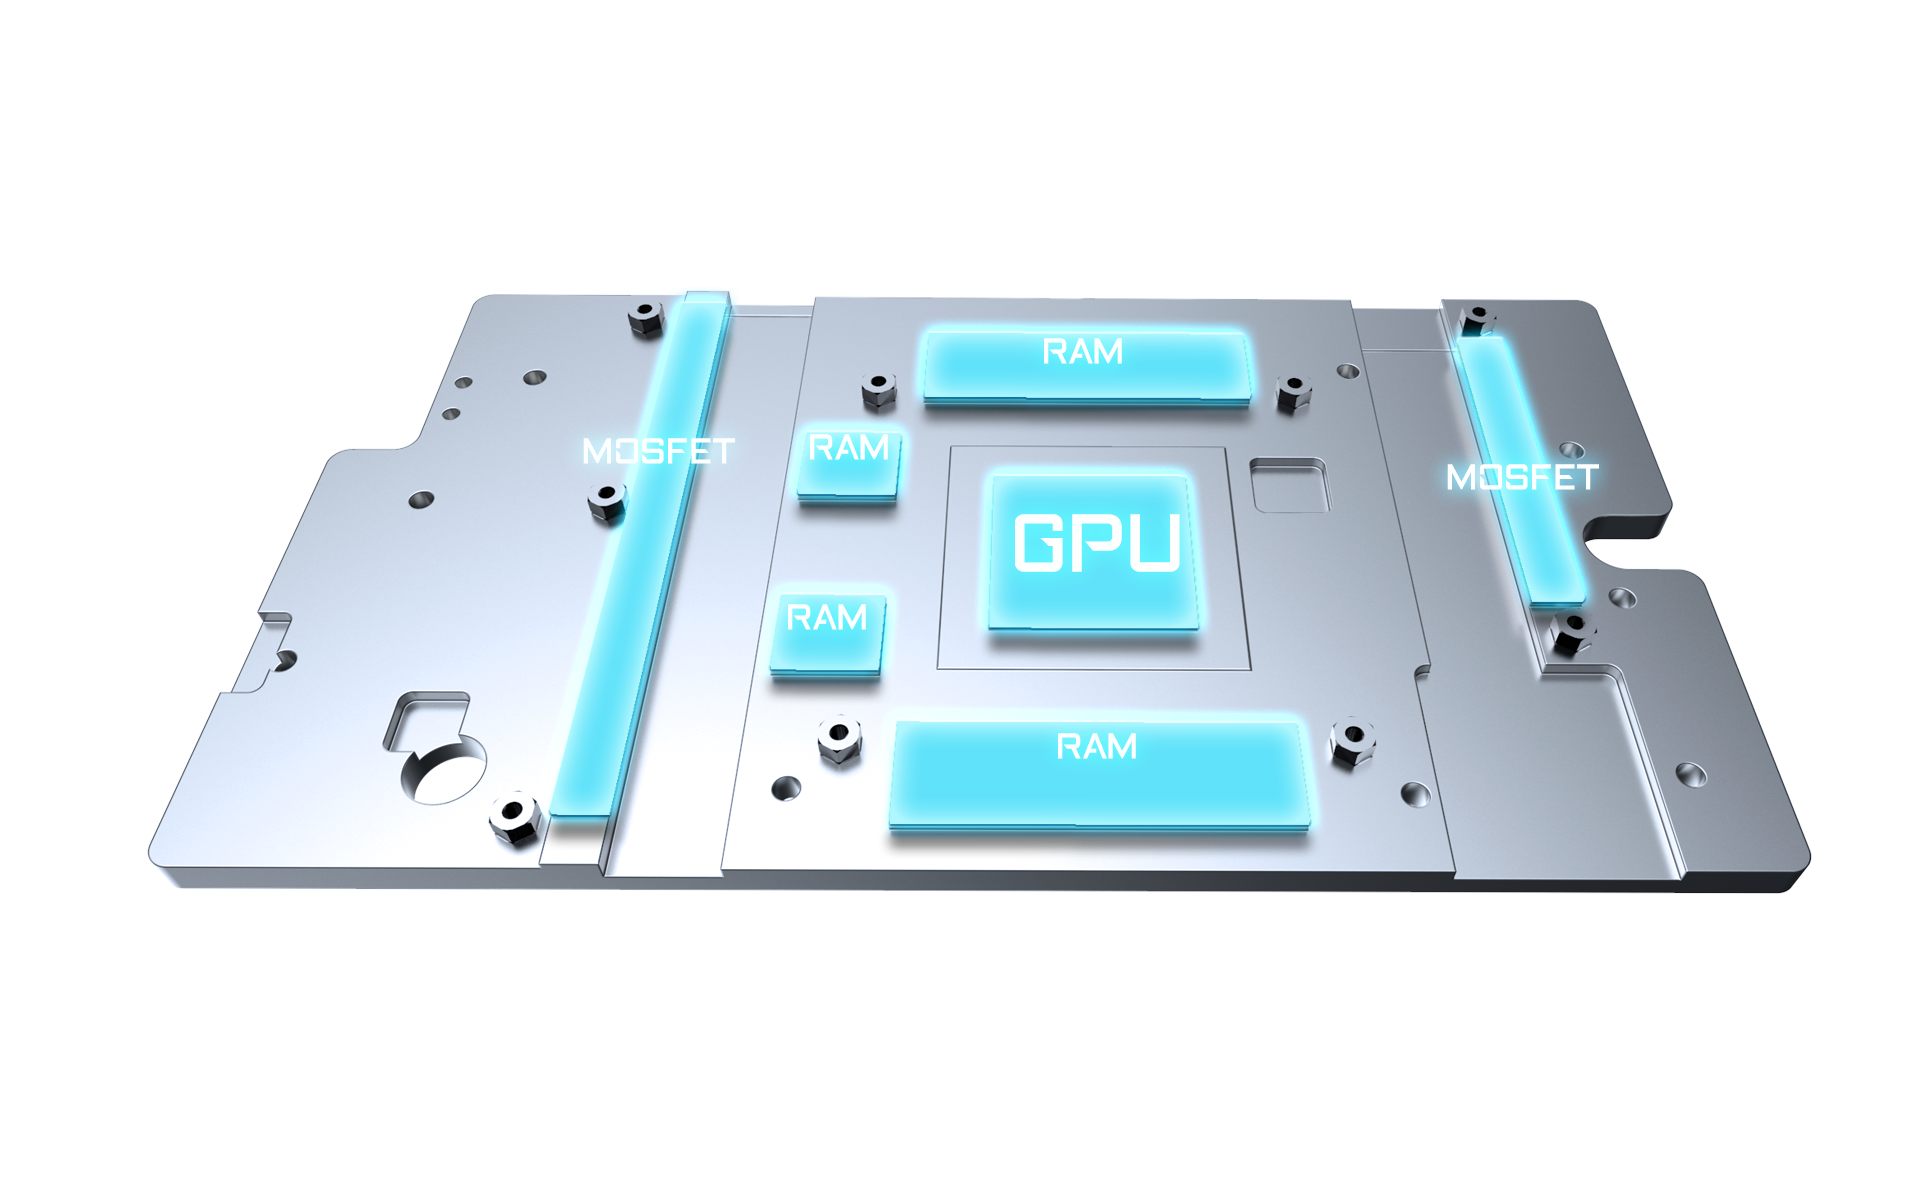 Gigabyte carte graphique AMD Radeon RX 6900 XT  (GV-R69XTAORUS